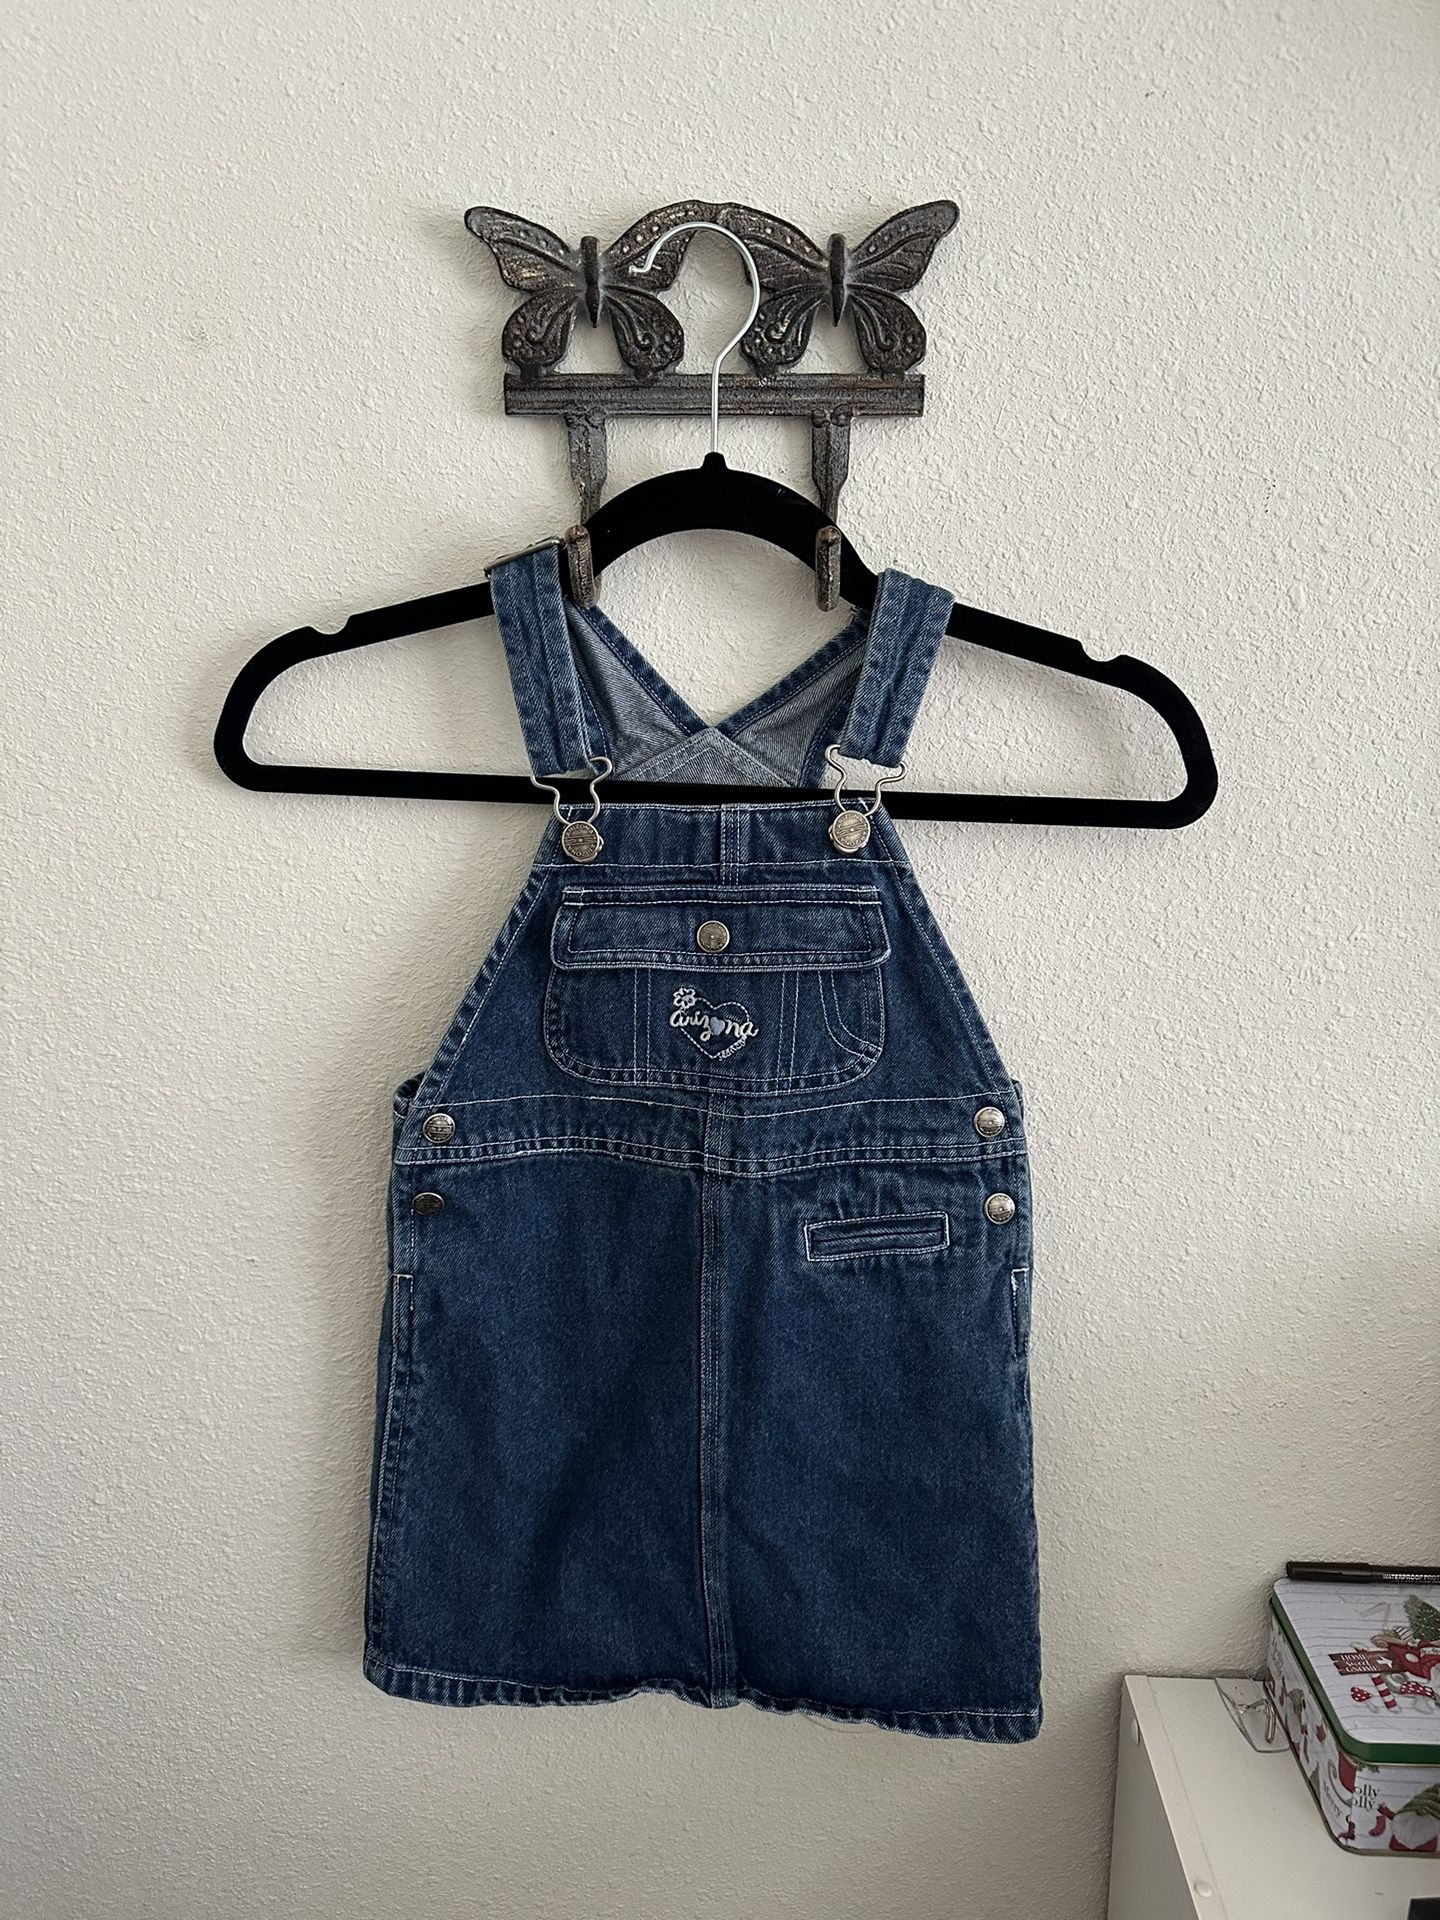 Vintage 1990s Arizona jeans girls overall dress